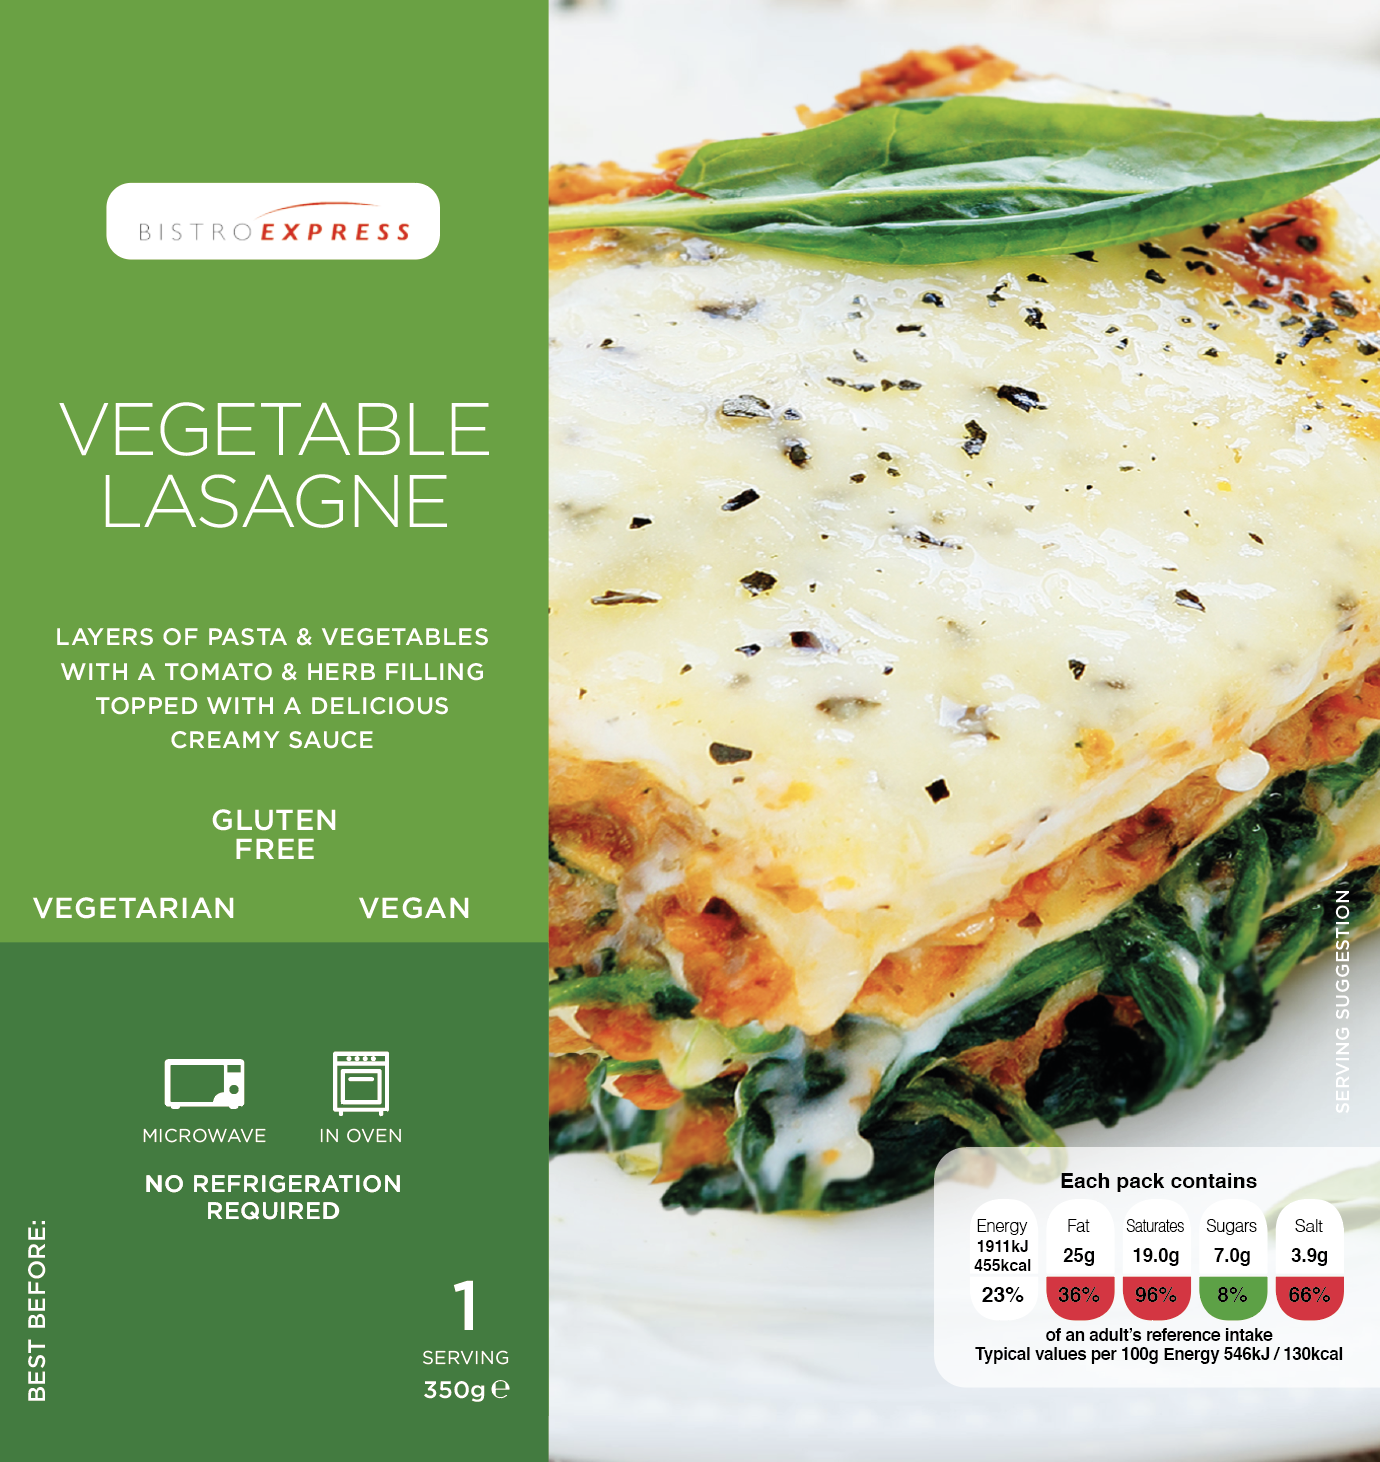 Bistro Express Vegetable Lasagne (Vegan) 350g x 6 | Enterprise Brands